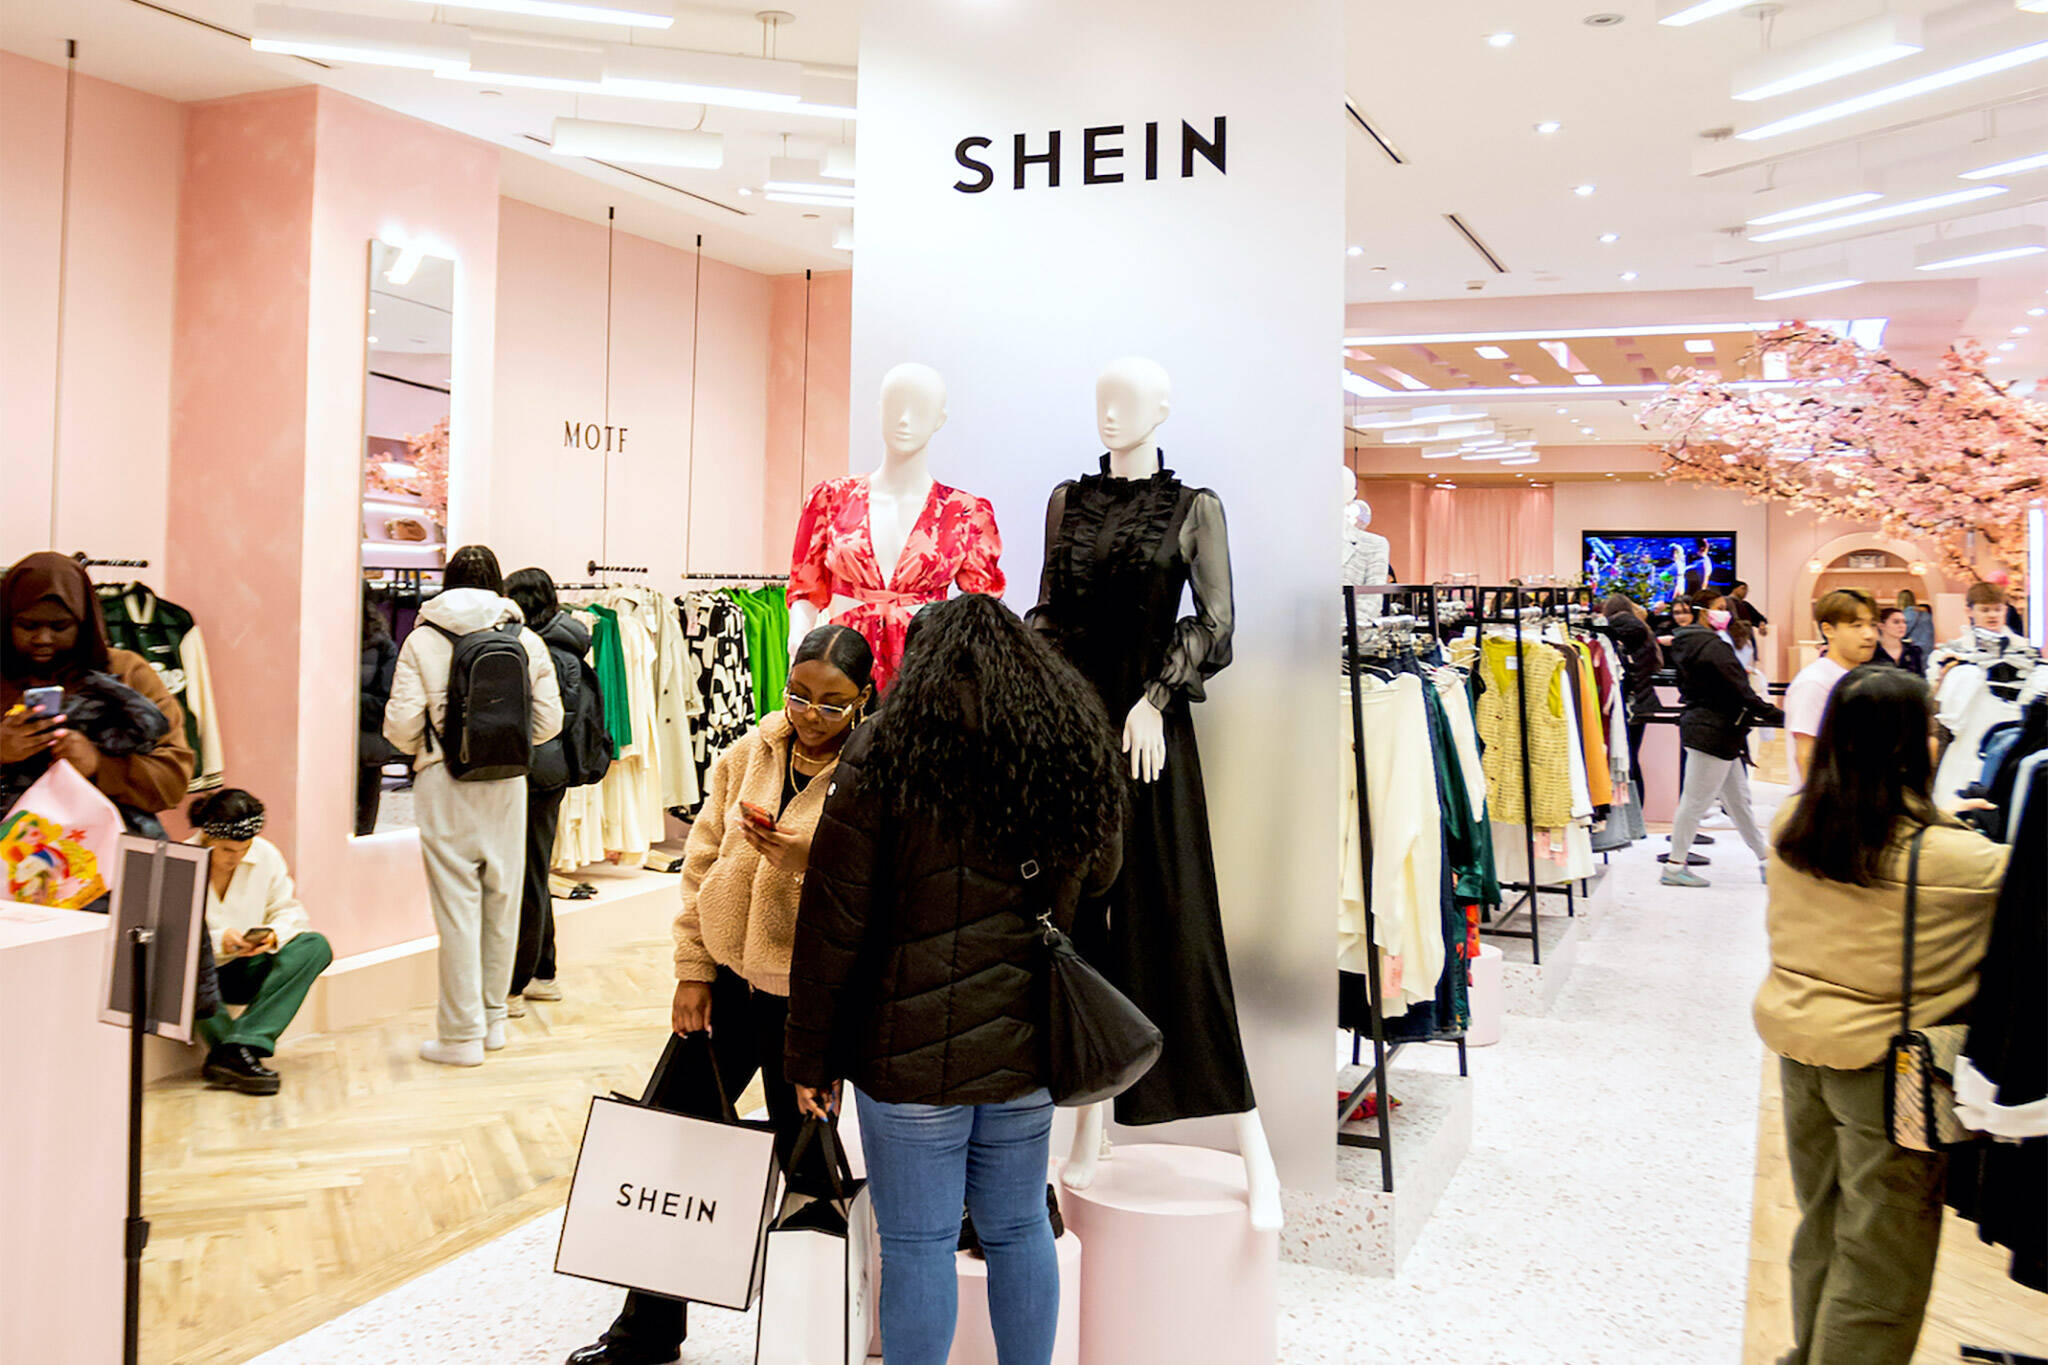 Popular fast-fashion brand SHEIN is opening a store near Toronto next week